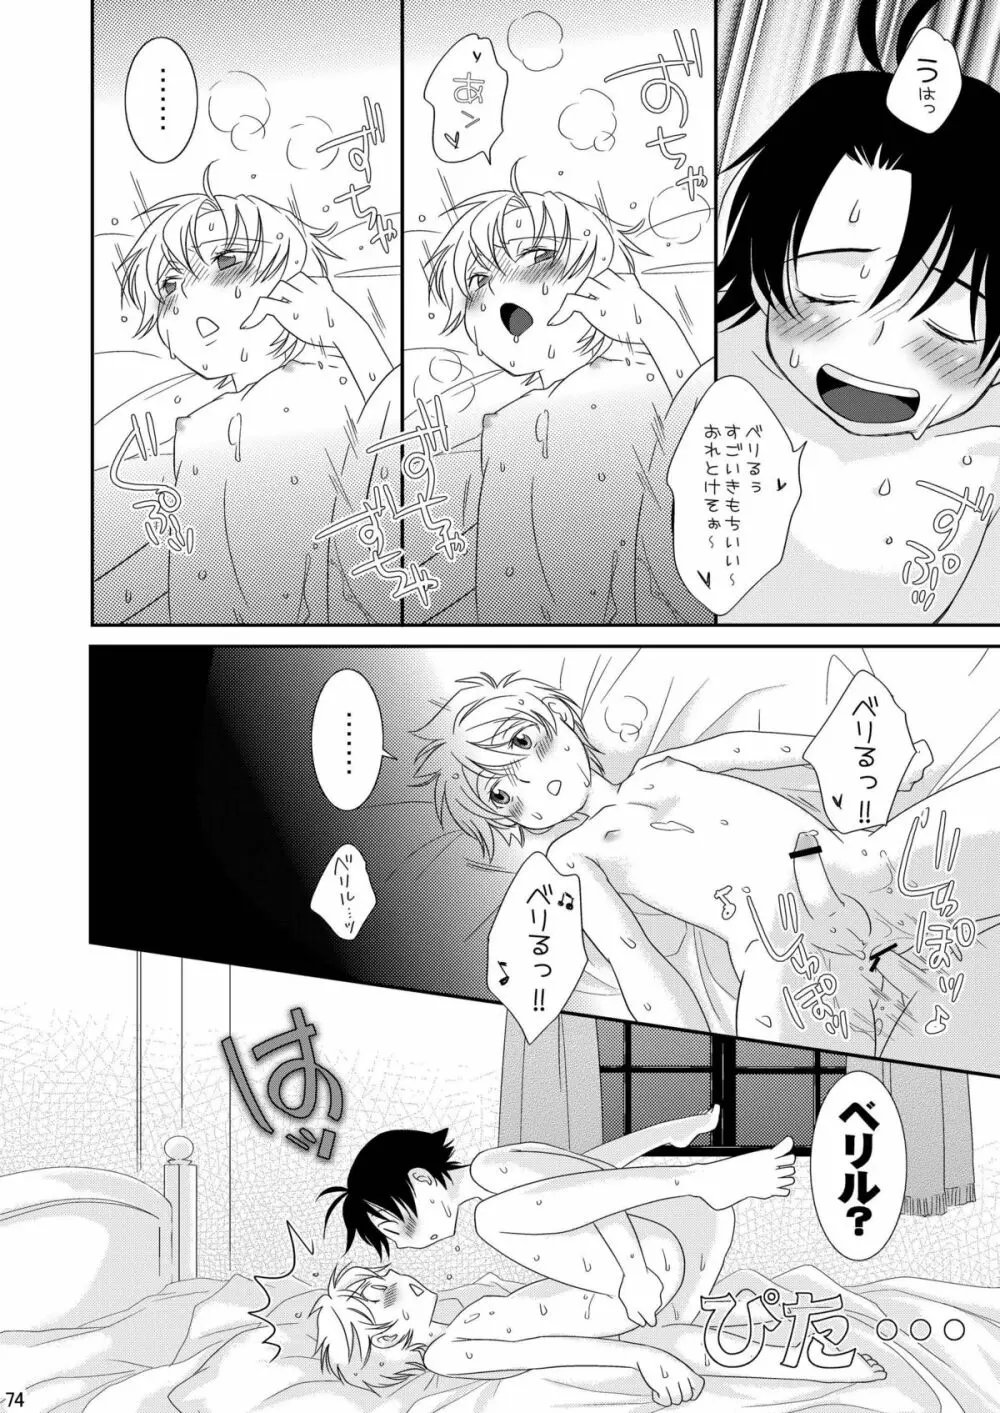 Re: ぷれい2 - page74